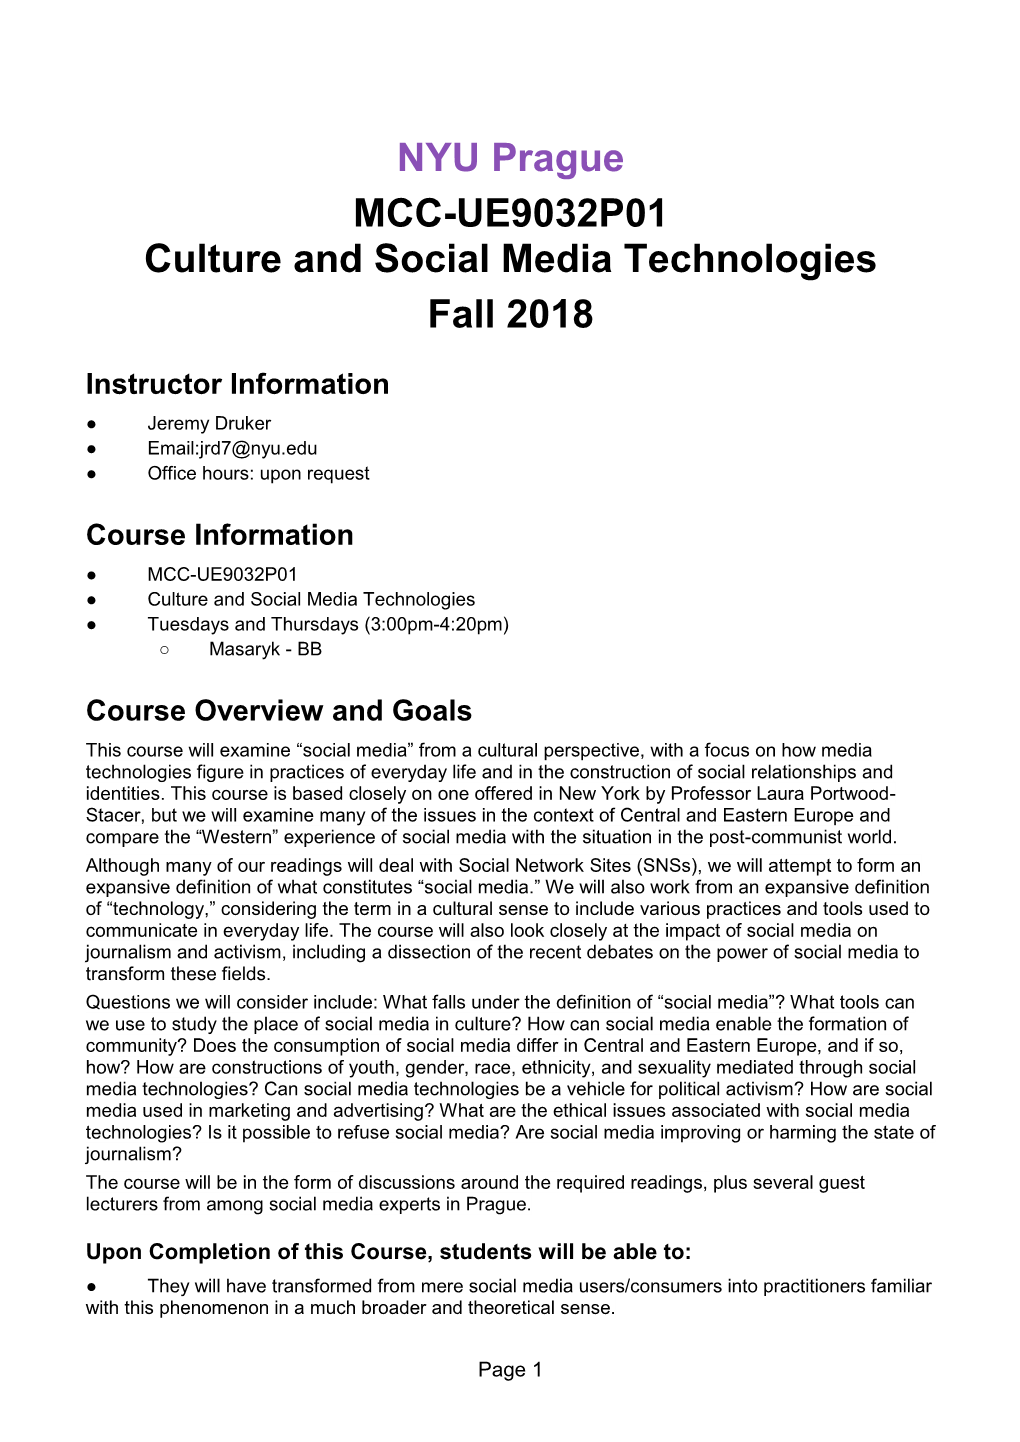 NYU Prague MCC-UE9032P01 Culture and Social Media Technologies Fall 2018